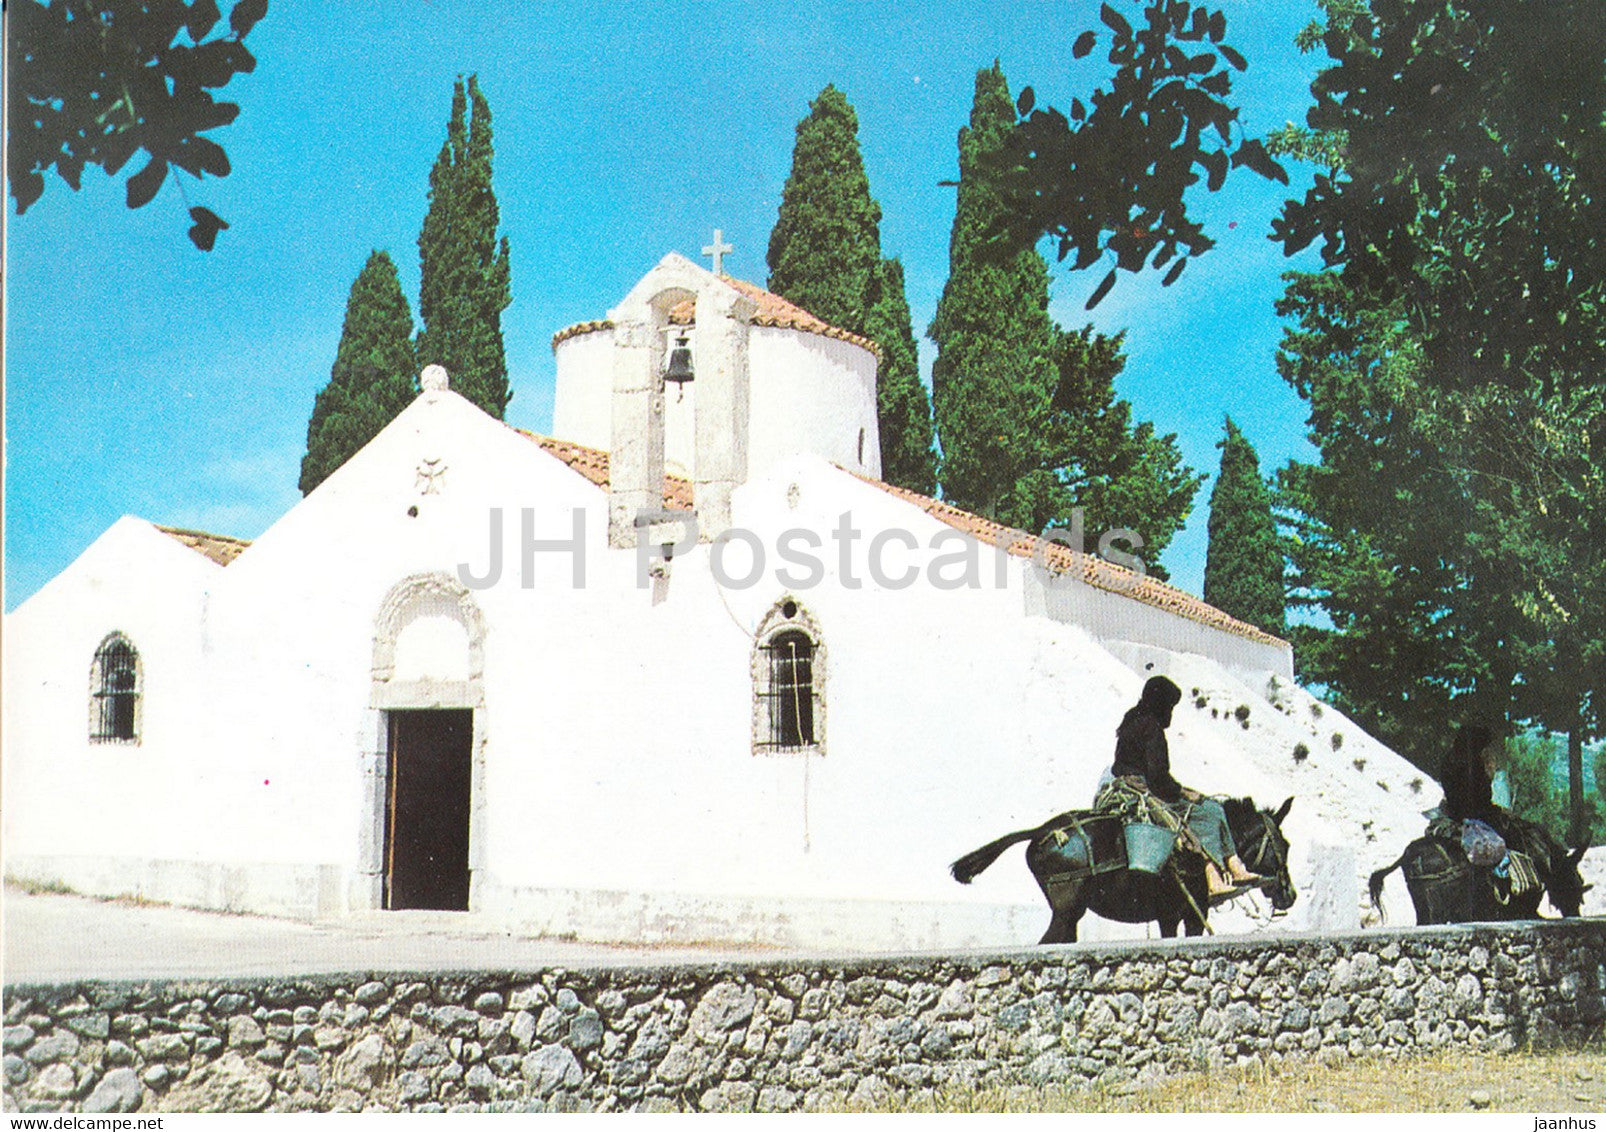 Crete - Kritsa - Church of St Virgin Kera - horse - Greece - unused - JH Postcards